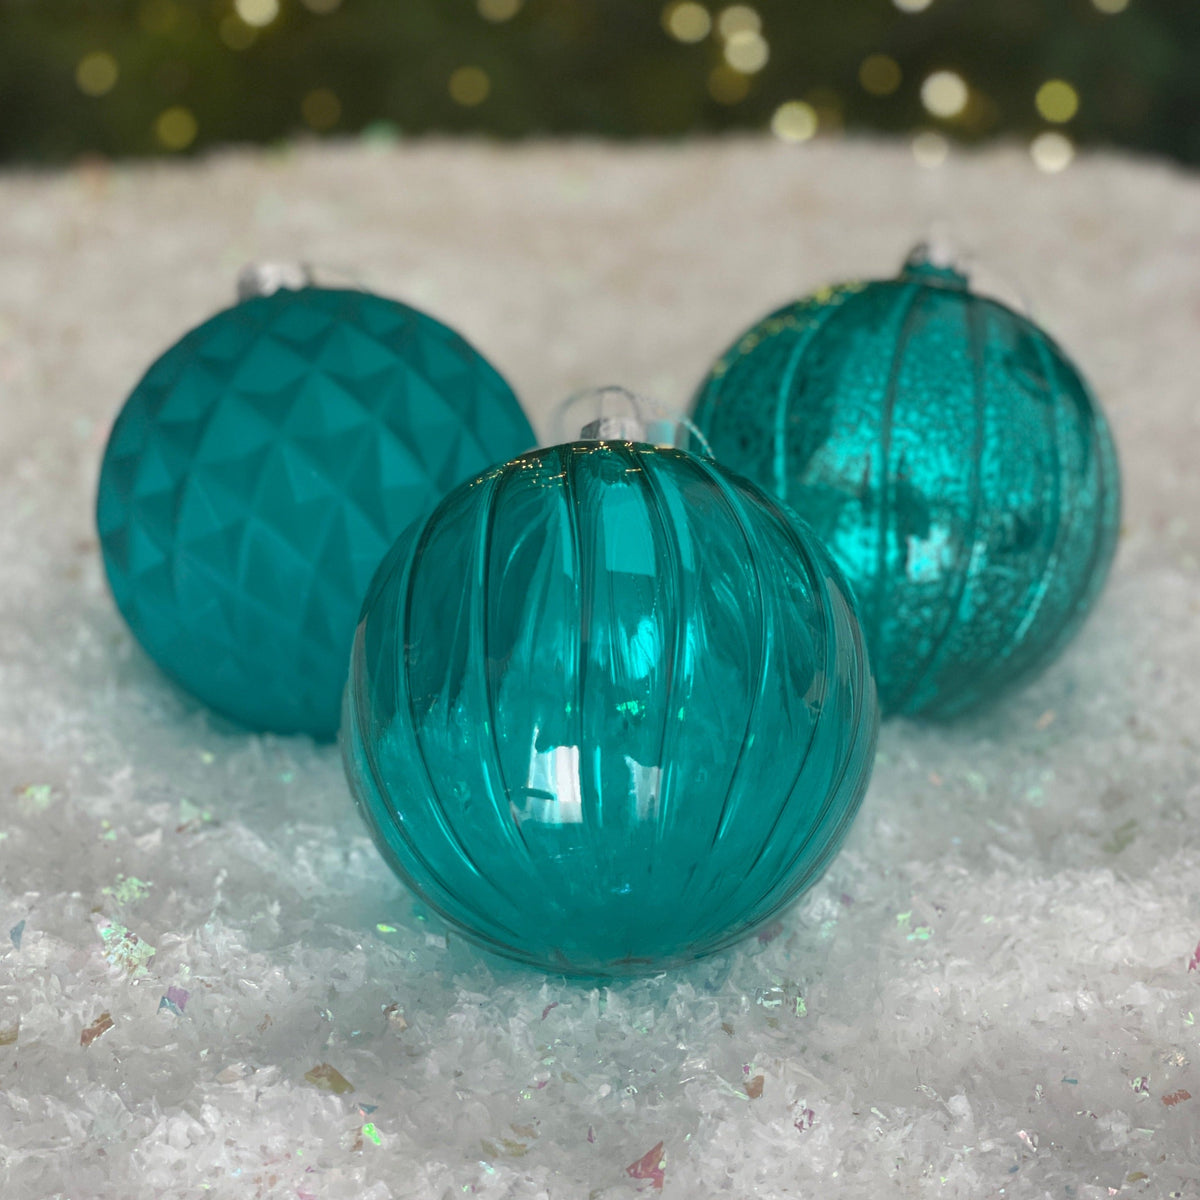 Transparent Teal Ball Ornament - My Christmas